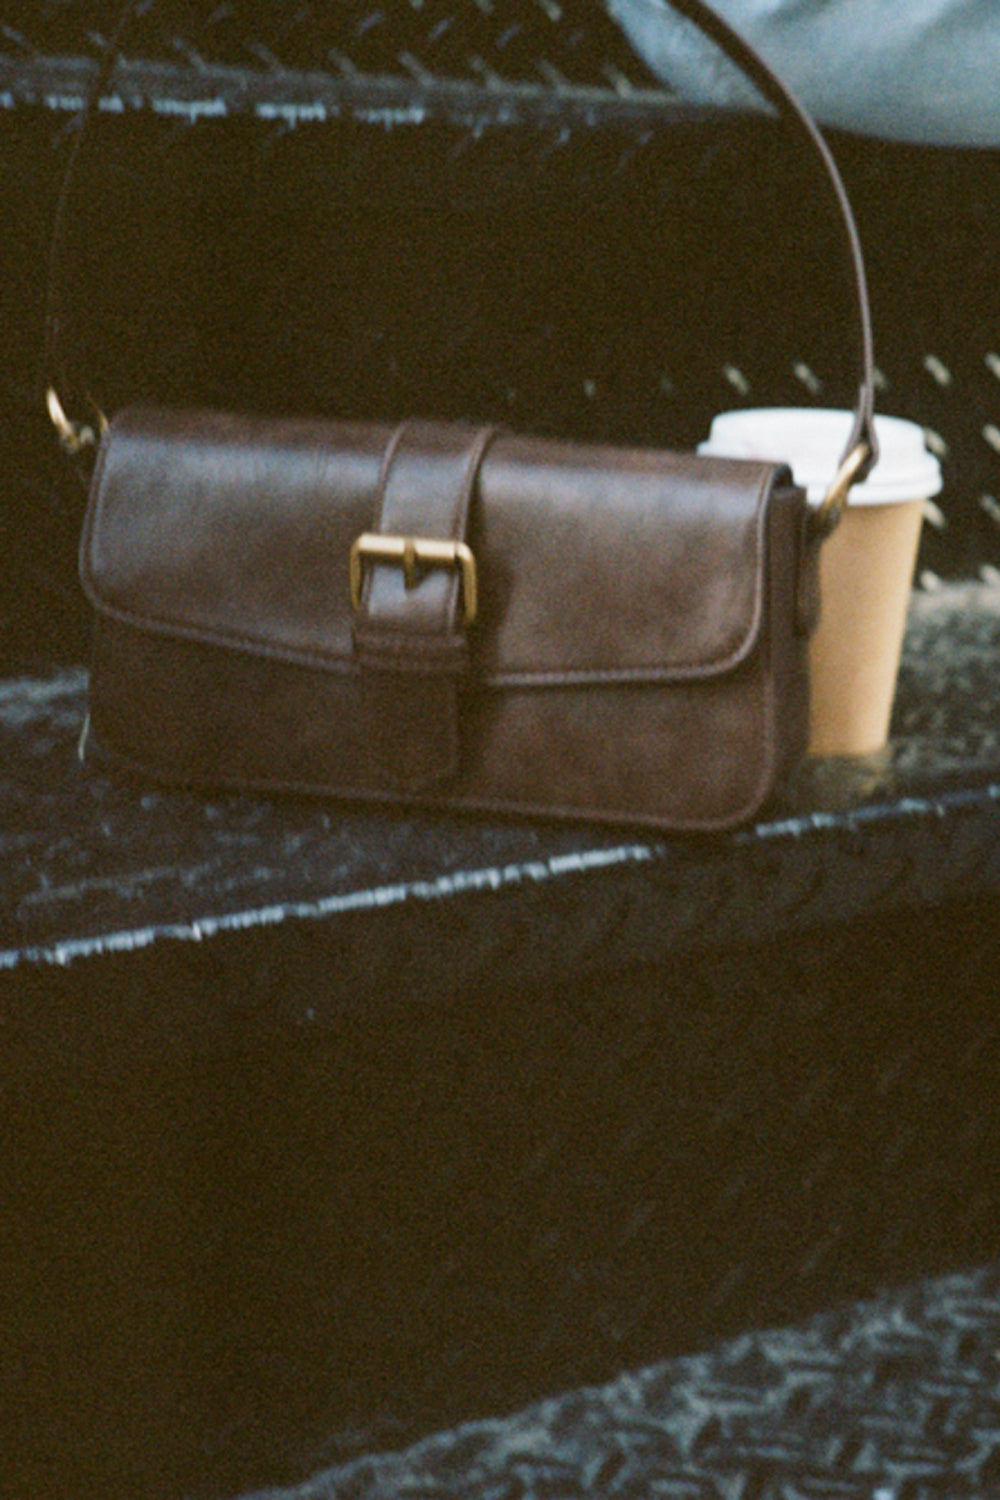 brown handbag